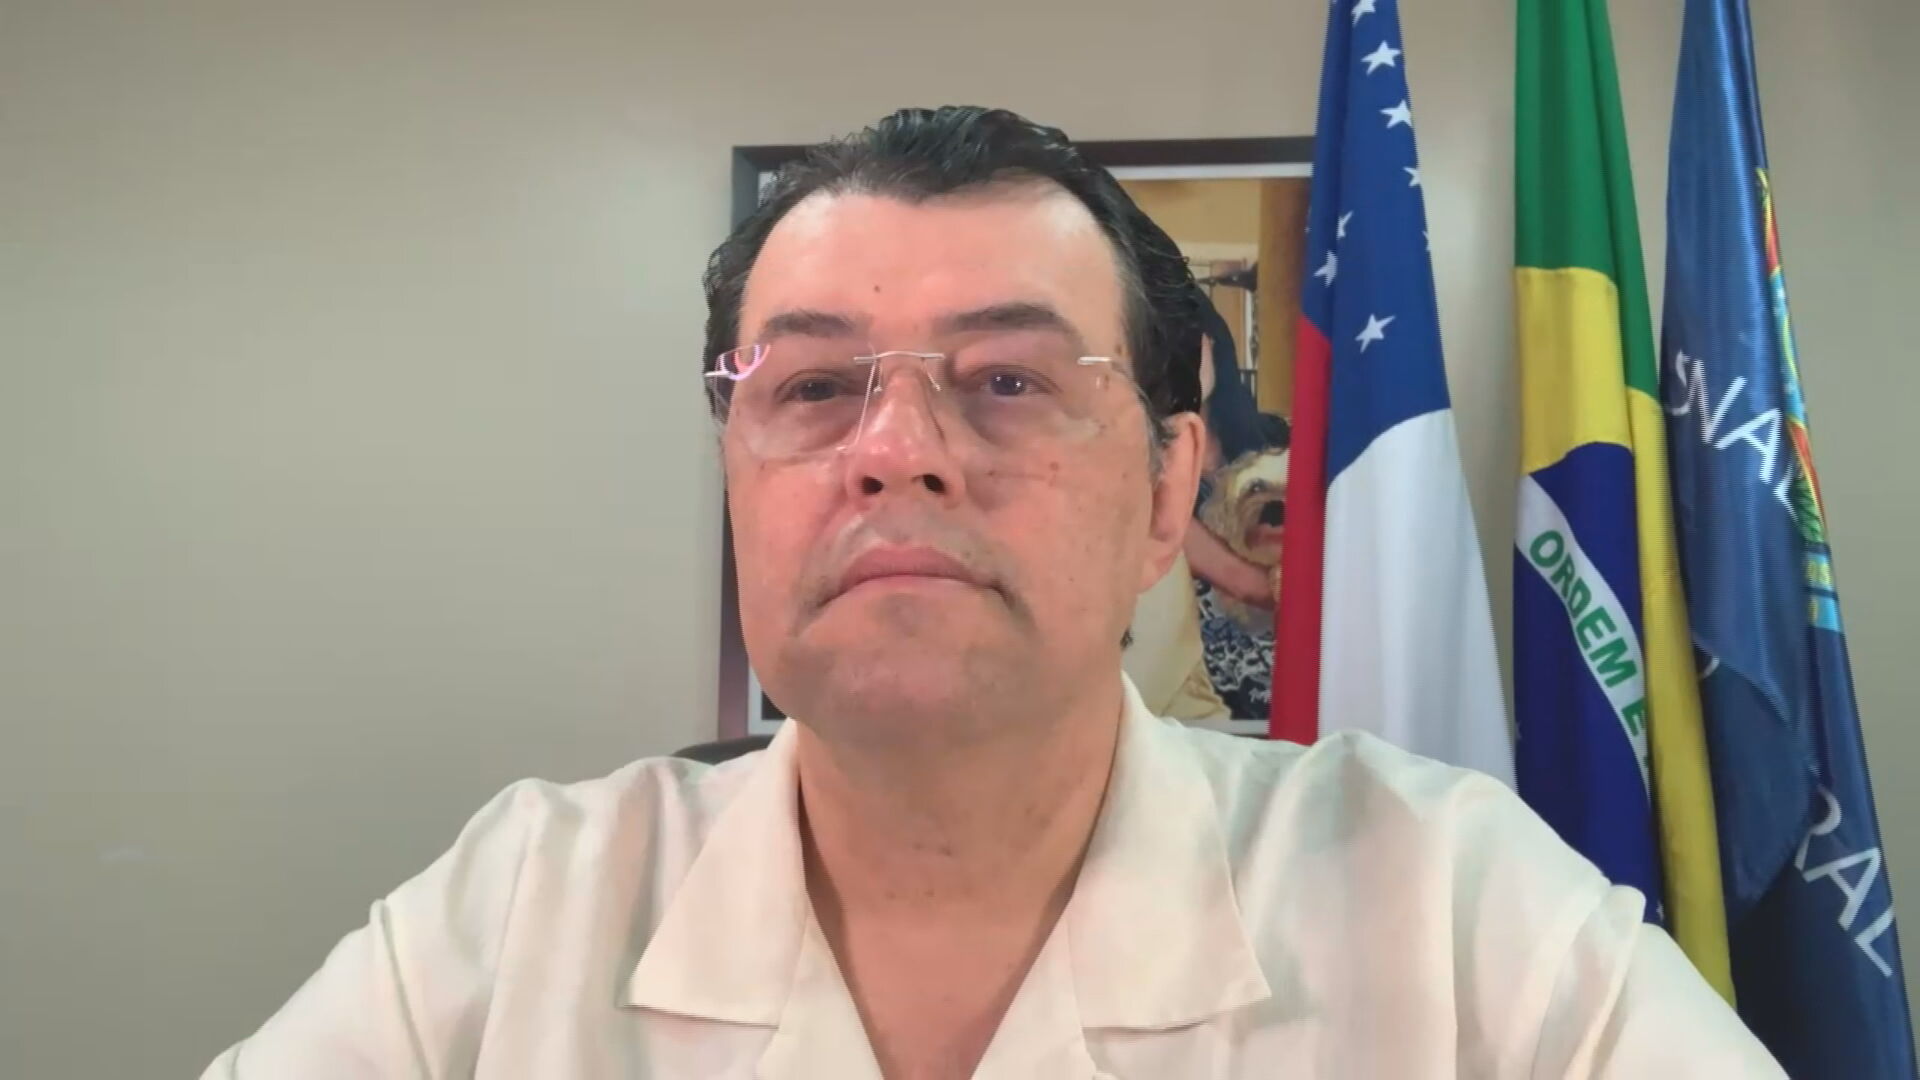 Senador Eduardo Braga (MDB-AM) integrante da CPI da Pandemia (29 de maio de 2021